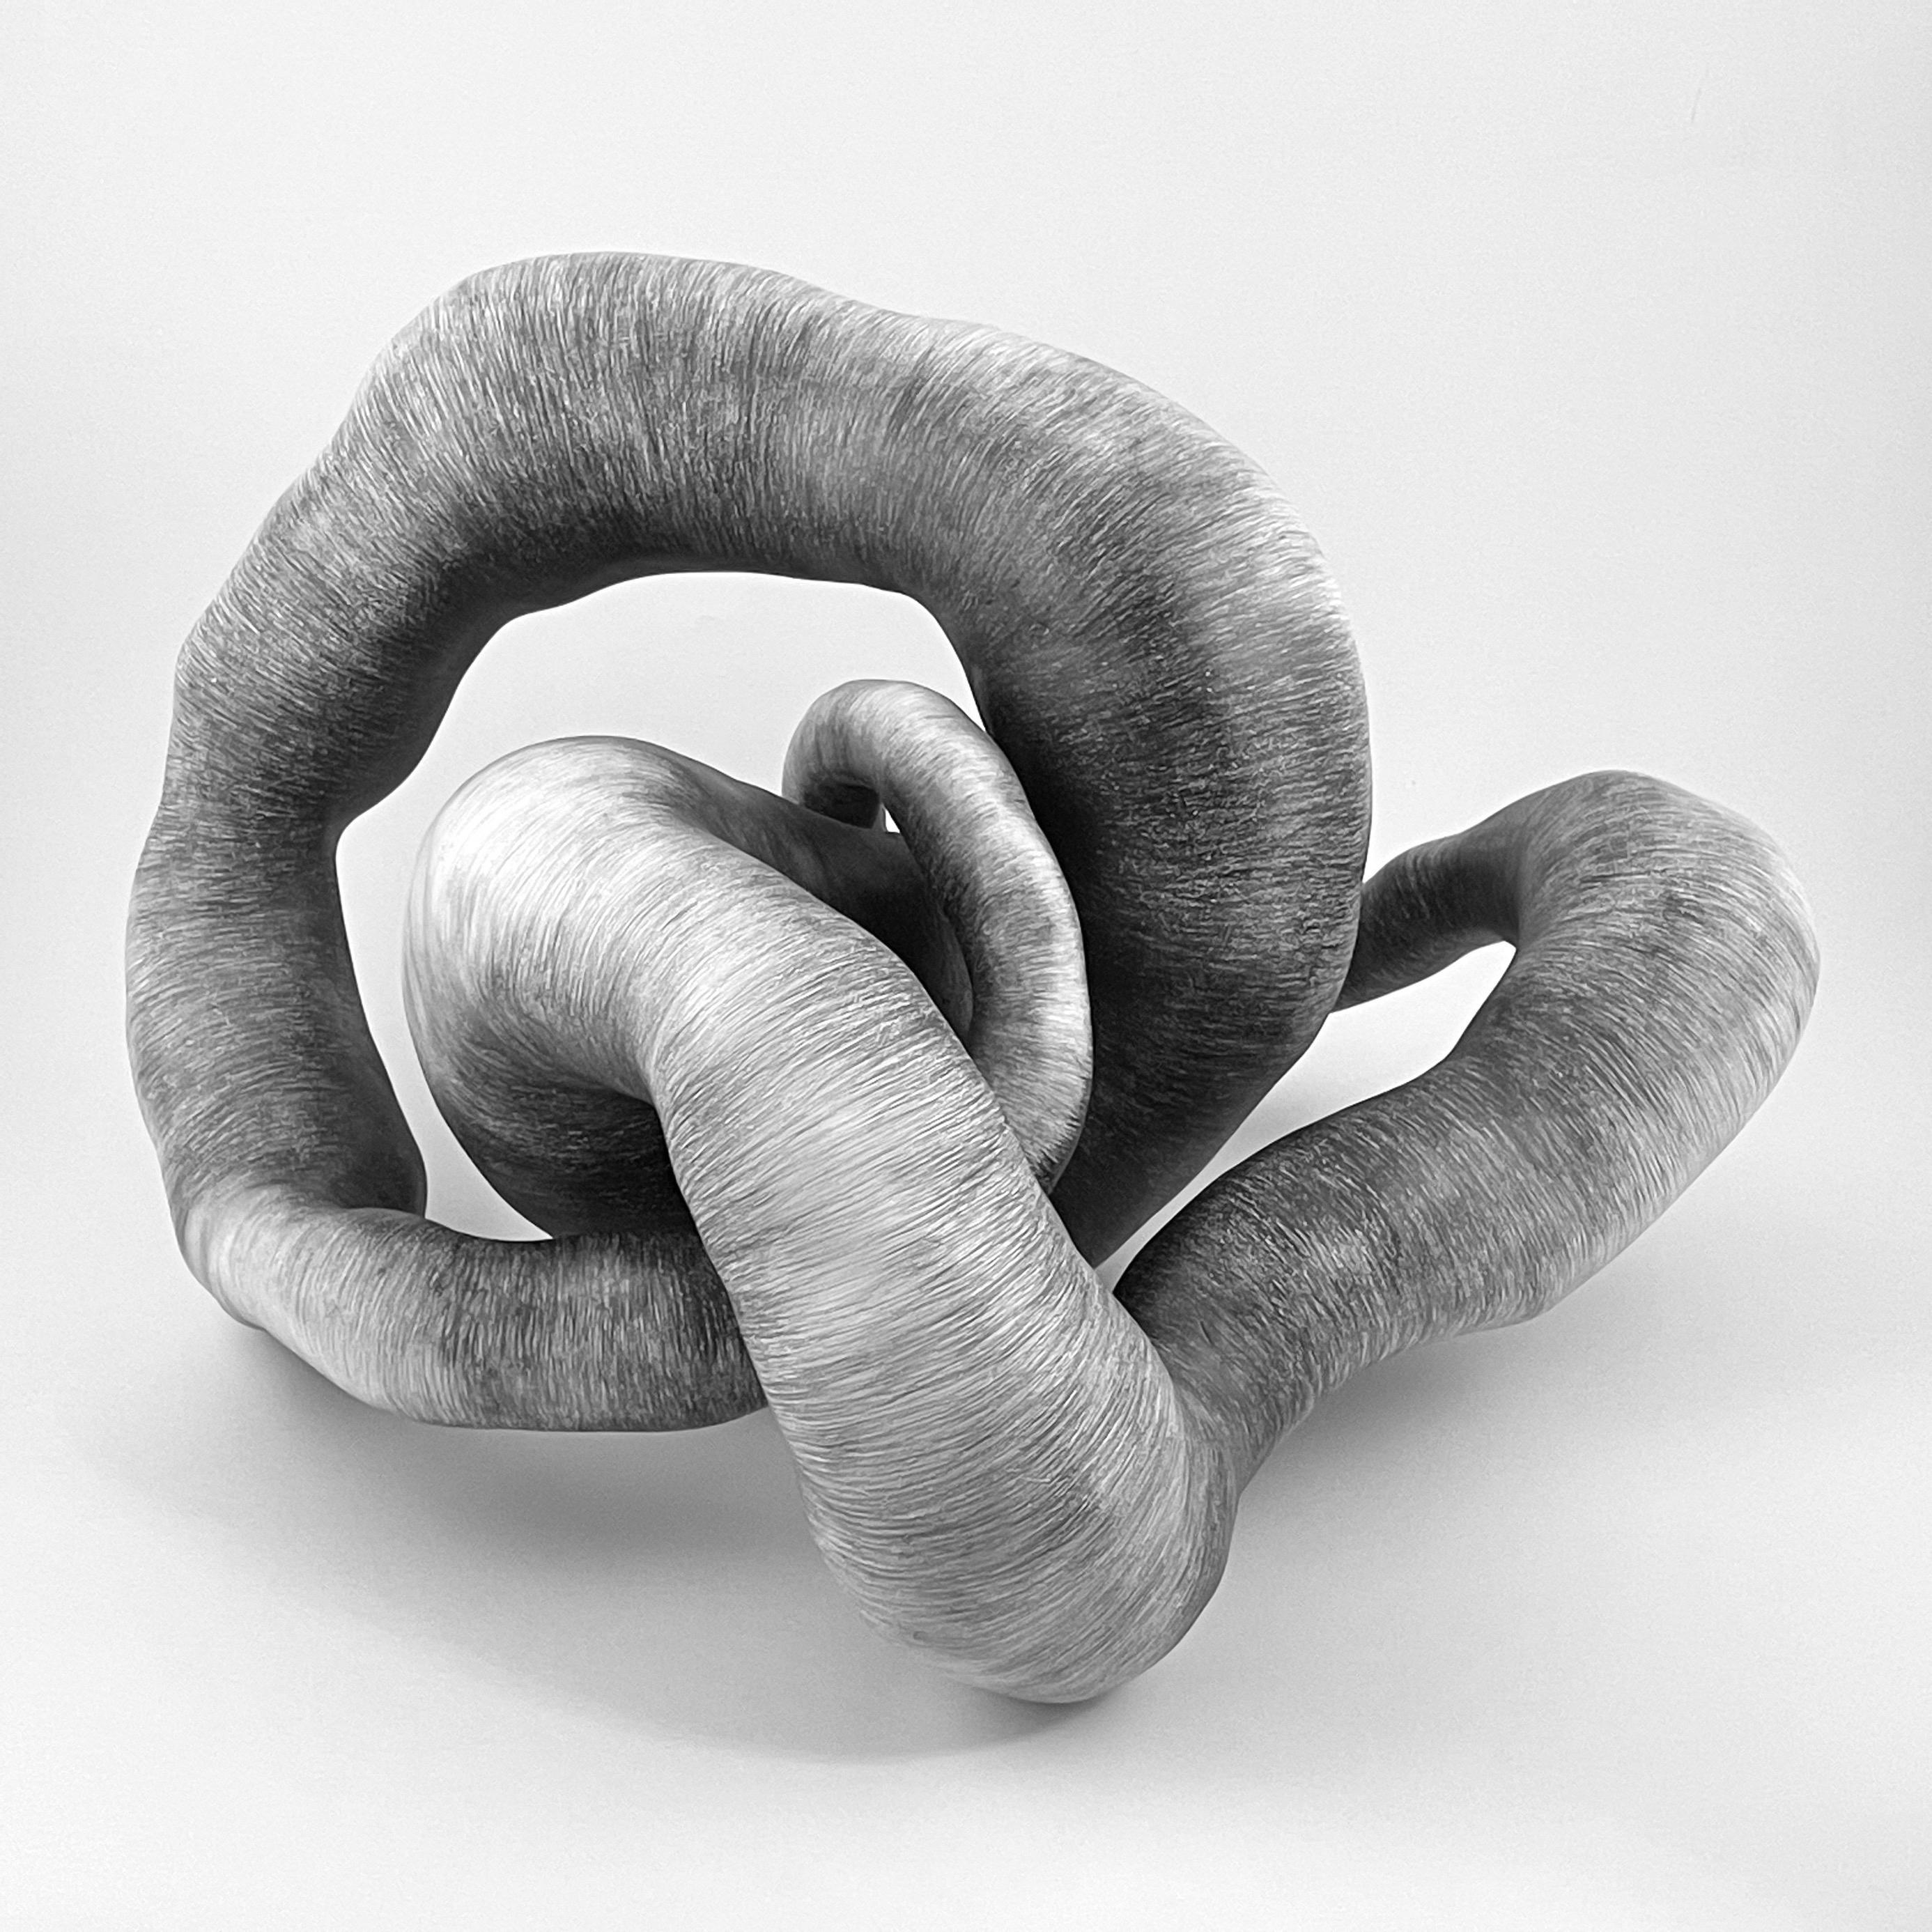 Abstract Sculpture Judi Tavill - Sculpture abstraite minimaliste en argile : « Twist »